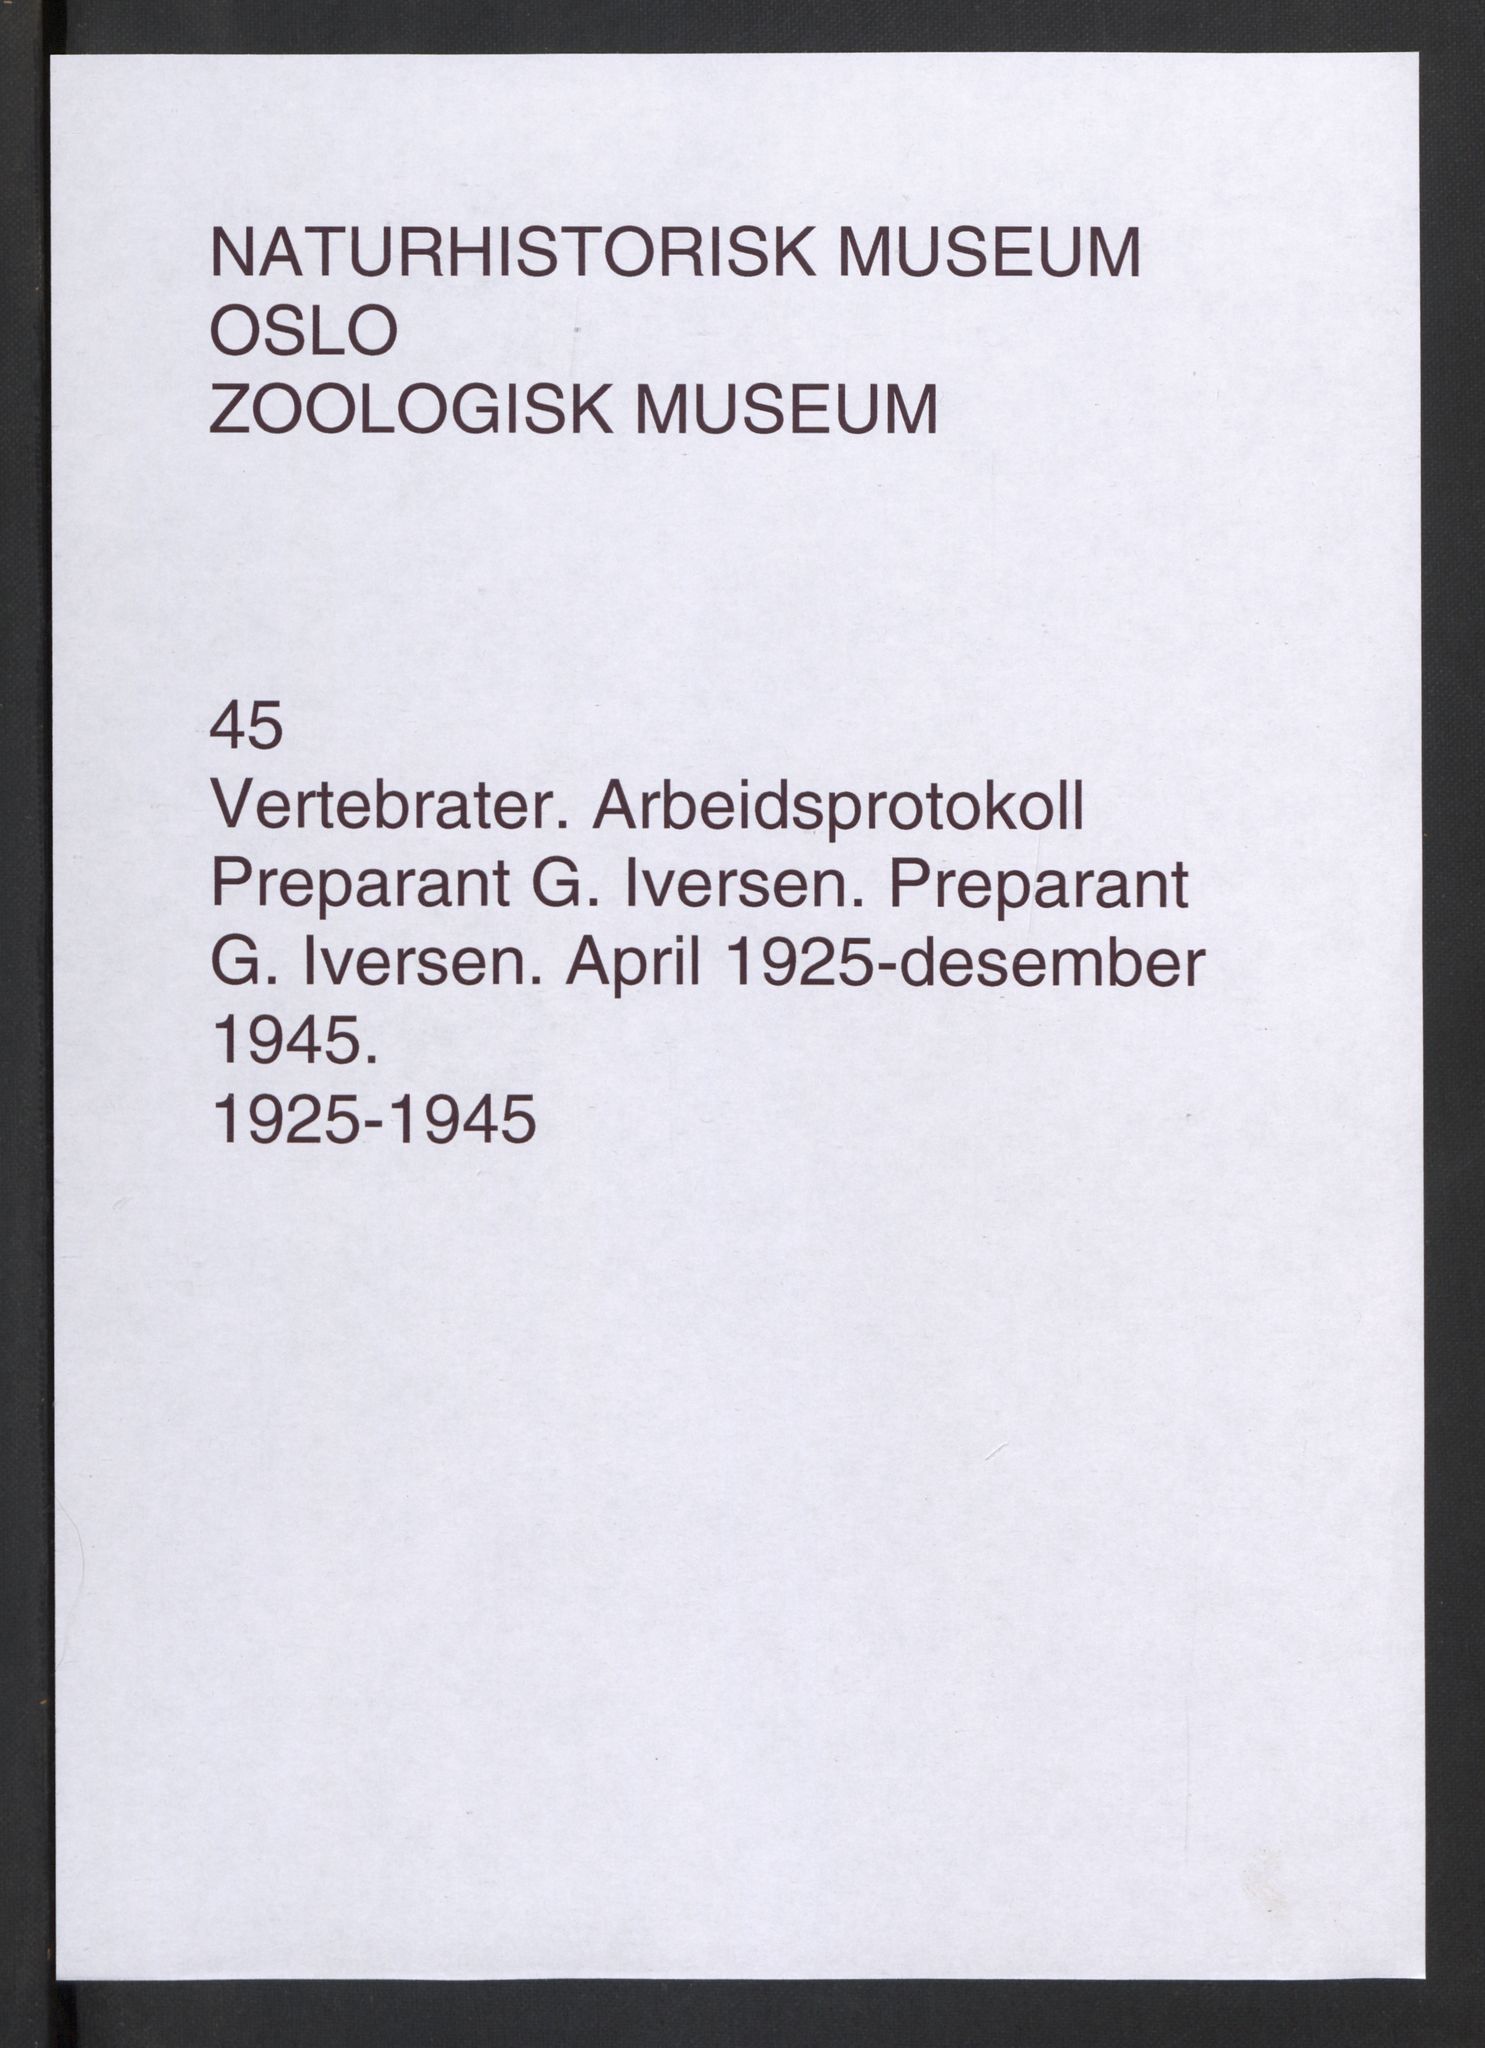 Naturhistorisk museum (Oslo), NHMO/-/5, 1925-1945